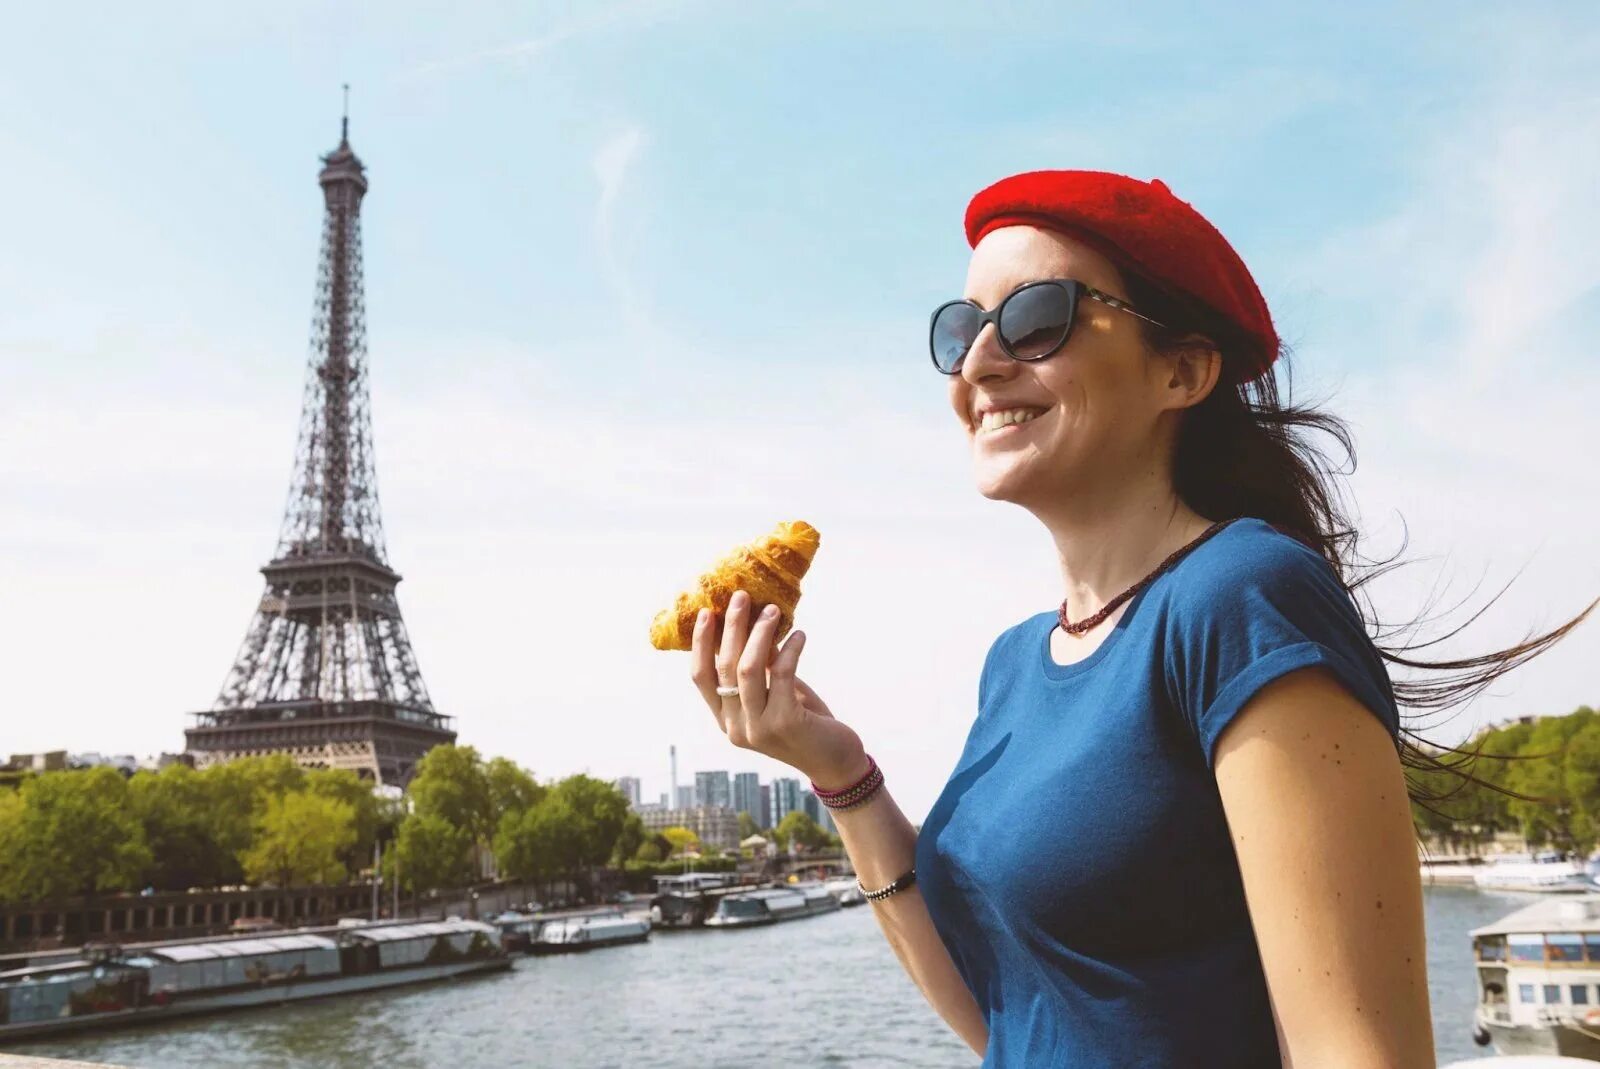 Работа французов. Франция люди. Француз с багетом на фоне Эйфелевой башни. Девушка с круассаном. Девушка с круассаном в Париже.